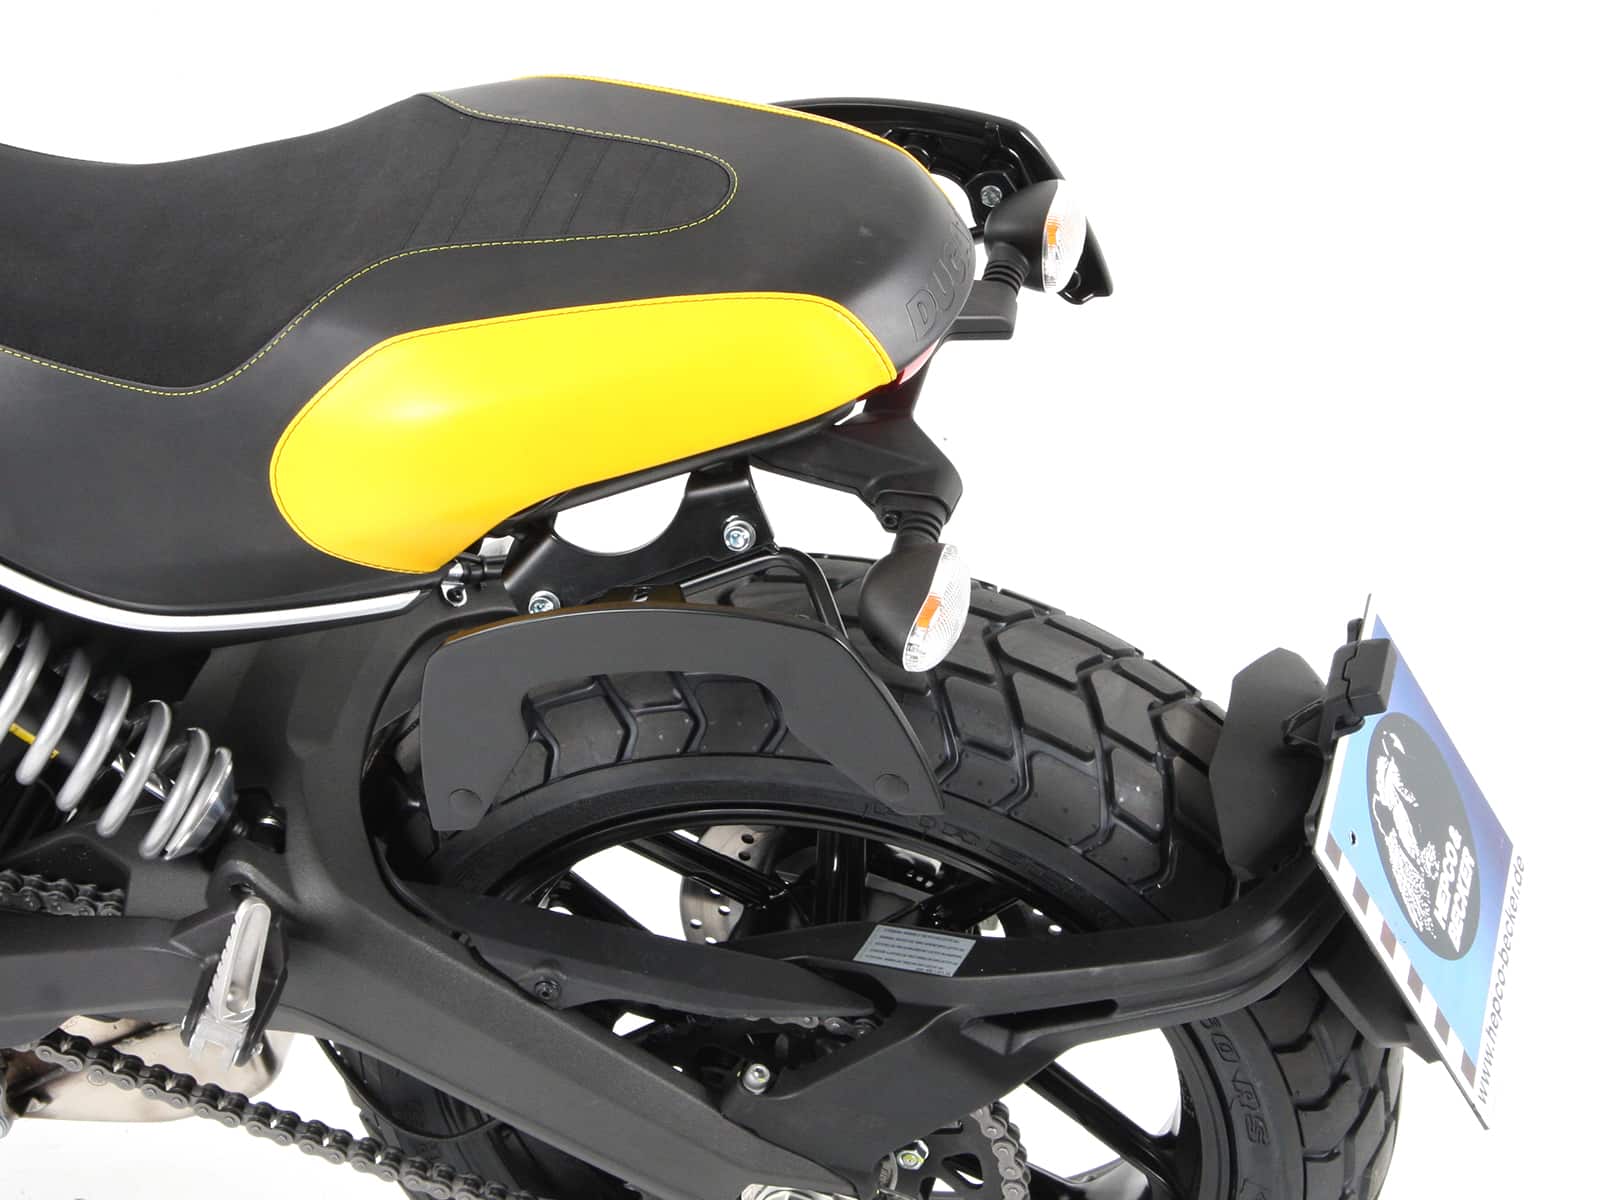 C-Bow sidecarrier for Ducati Scrambler 800 (2015-2018)